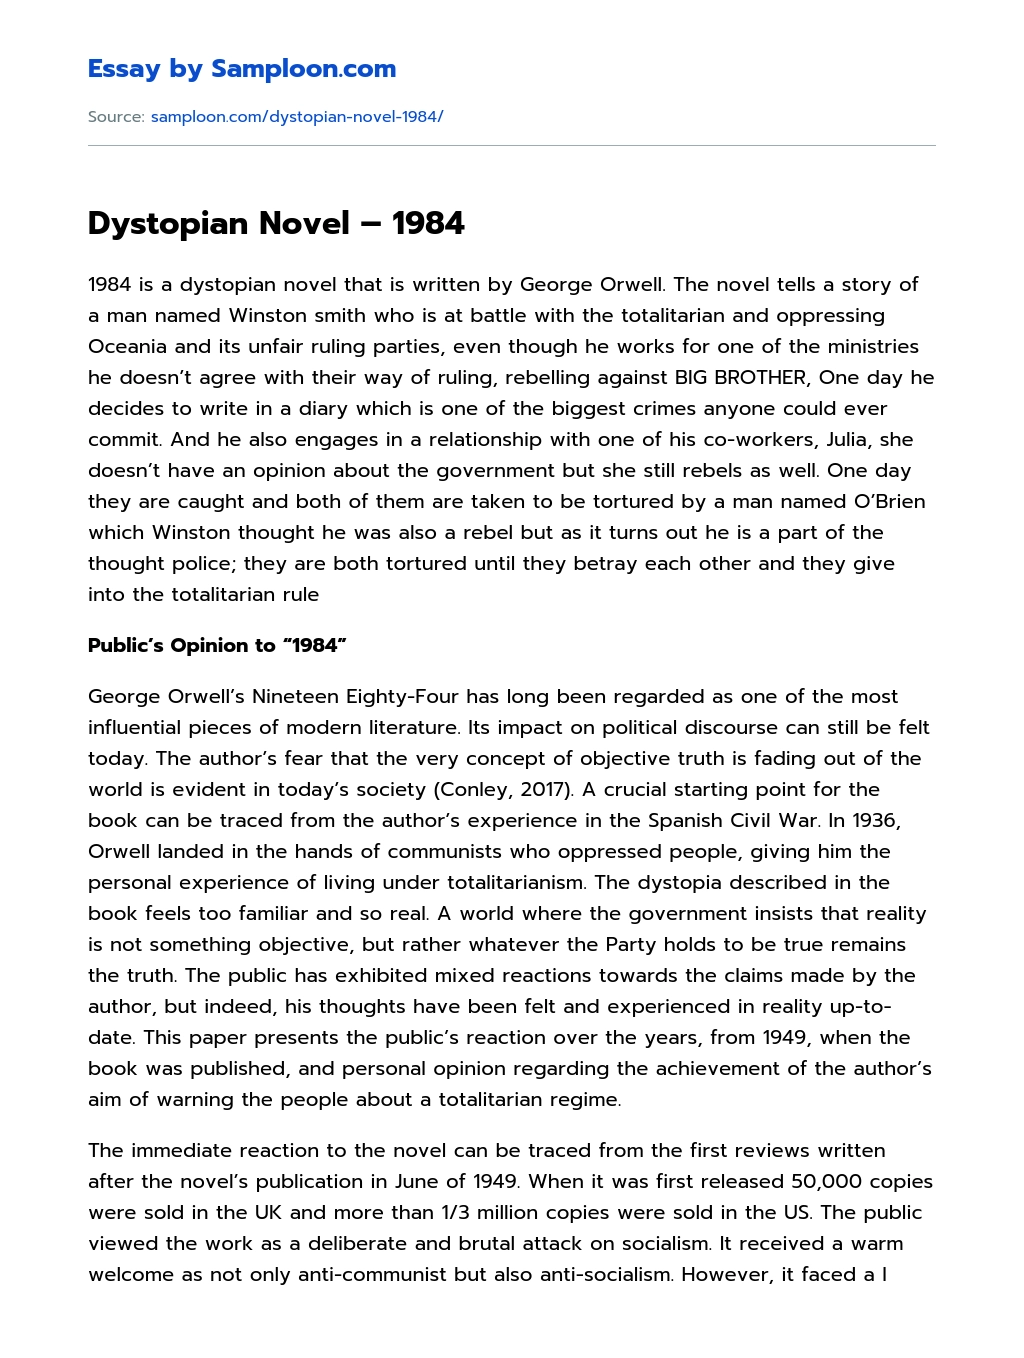 Dystopian Novel – 1984 essay